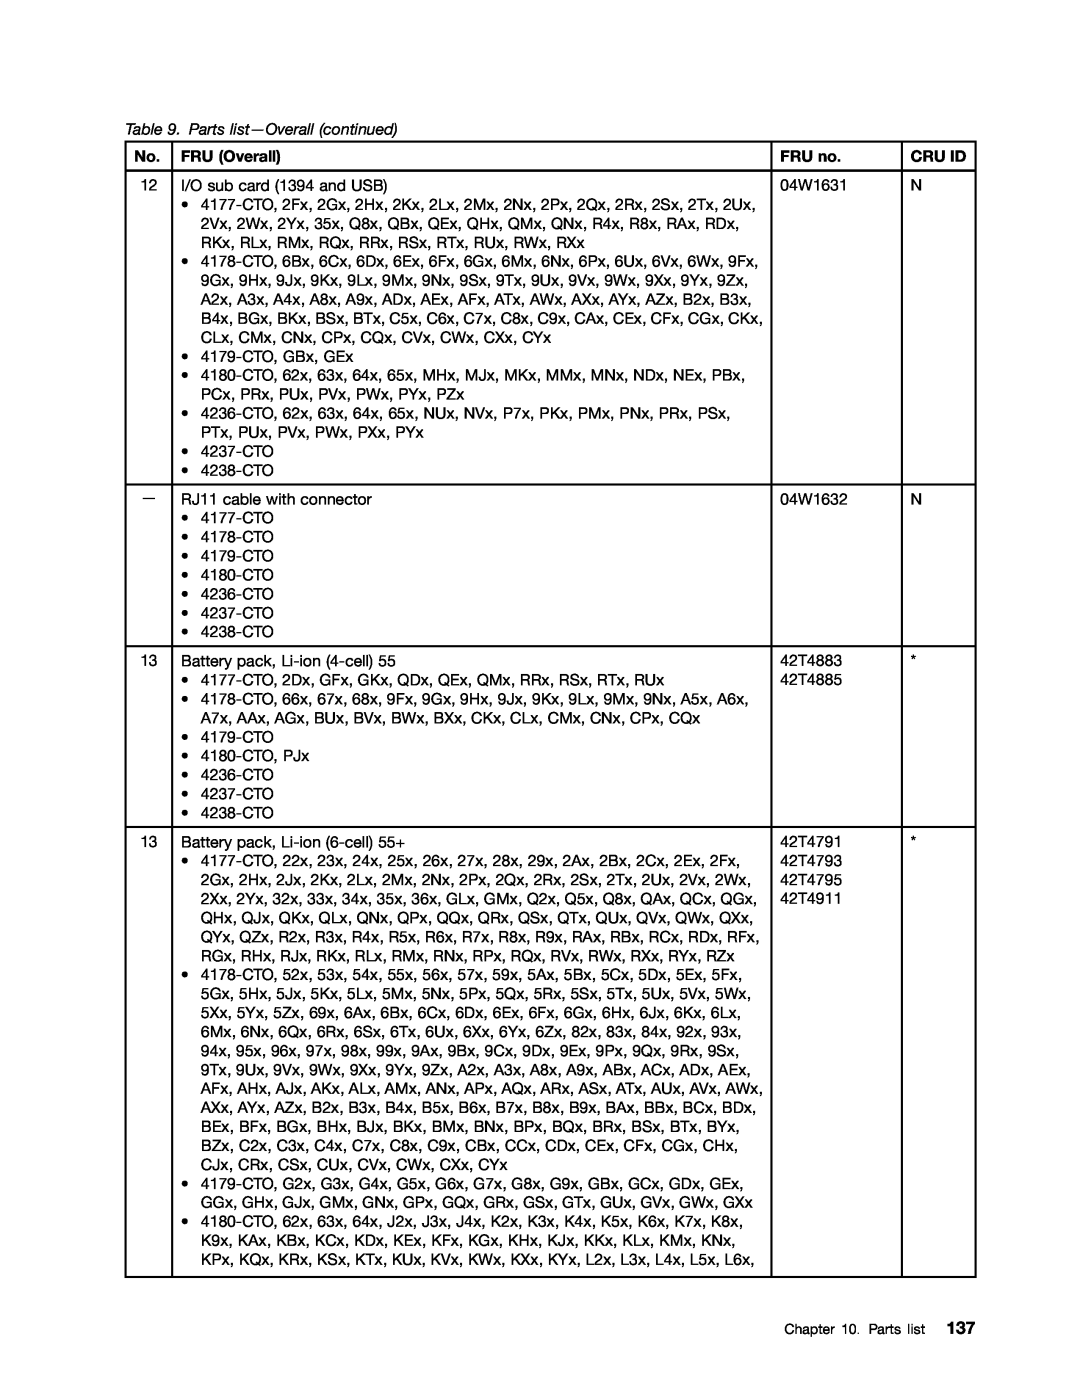 Lenovo T420i manual Parts list-Overall continued, FRU Overall, FRU no, Cru Id 